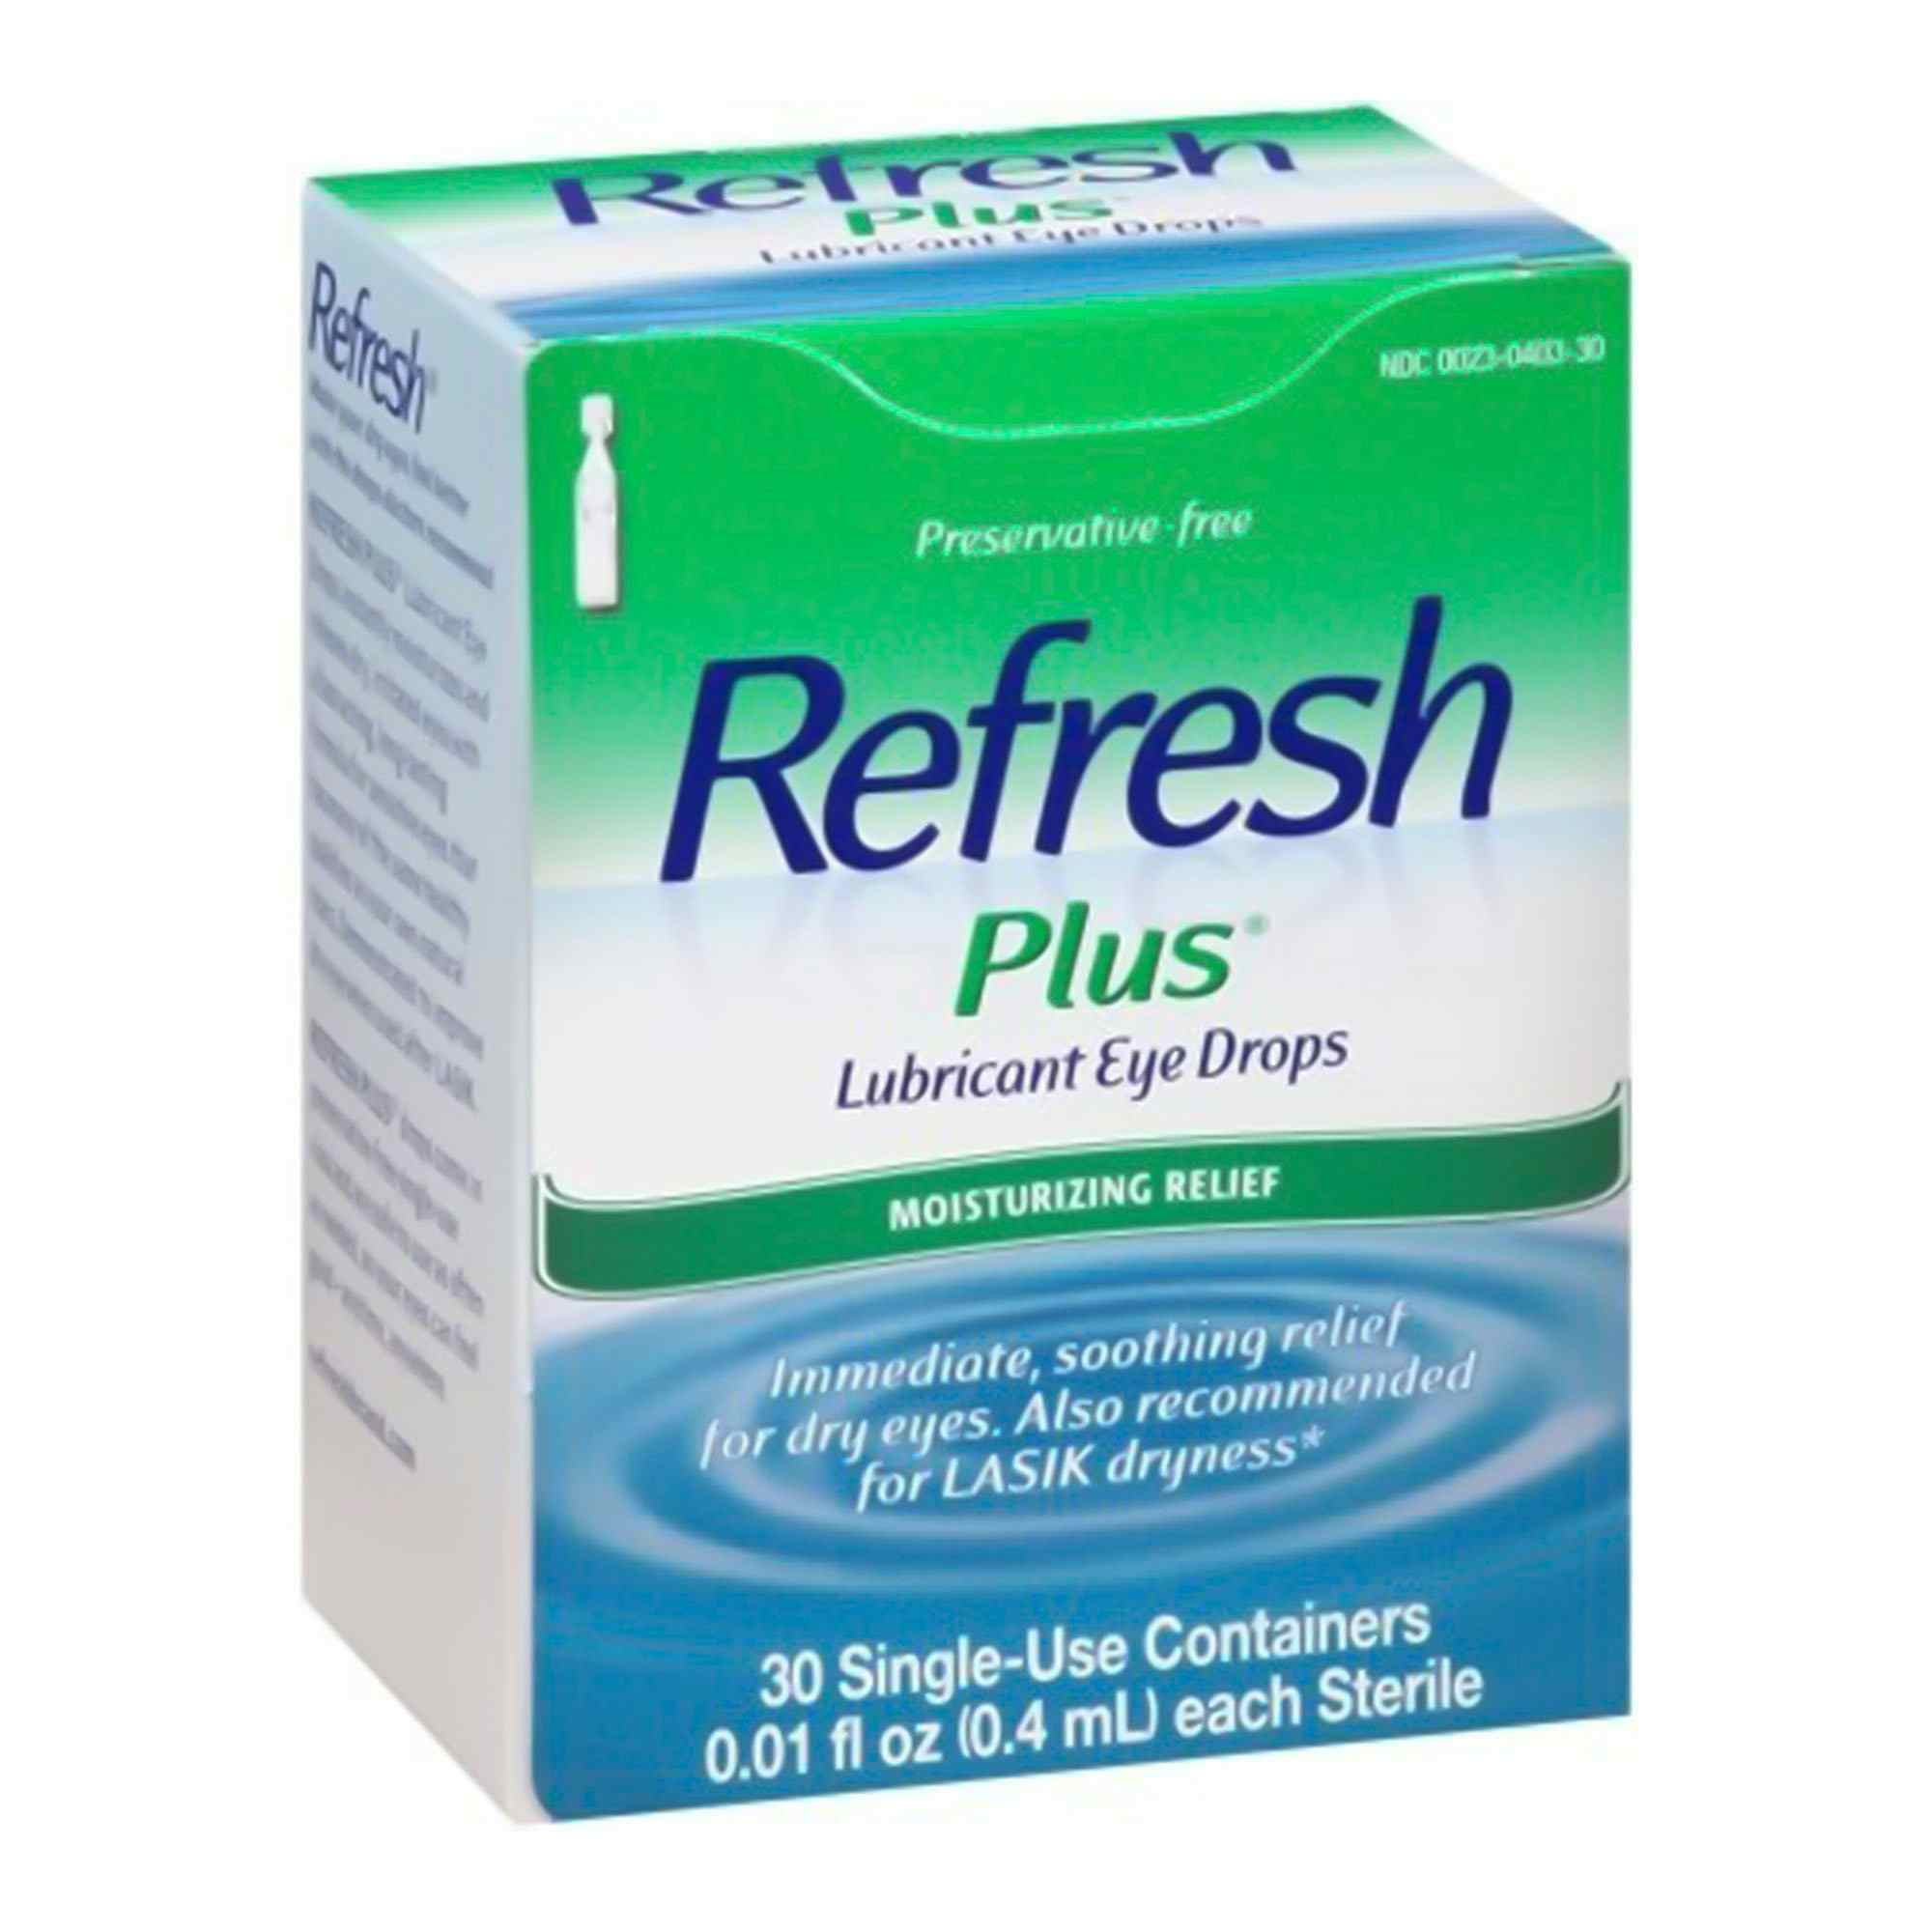 Refresh Plus Lubricant Eye Drops, 00023040330, 0.01 oz. - Box of 30